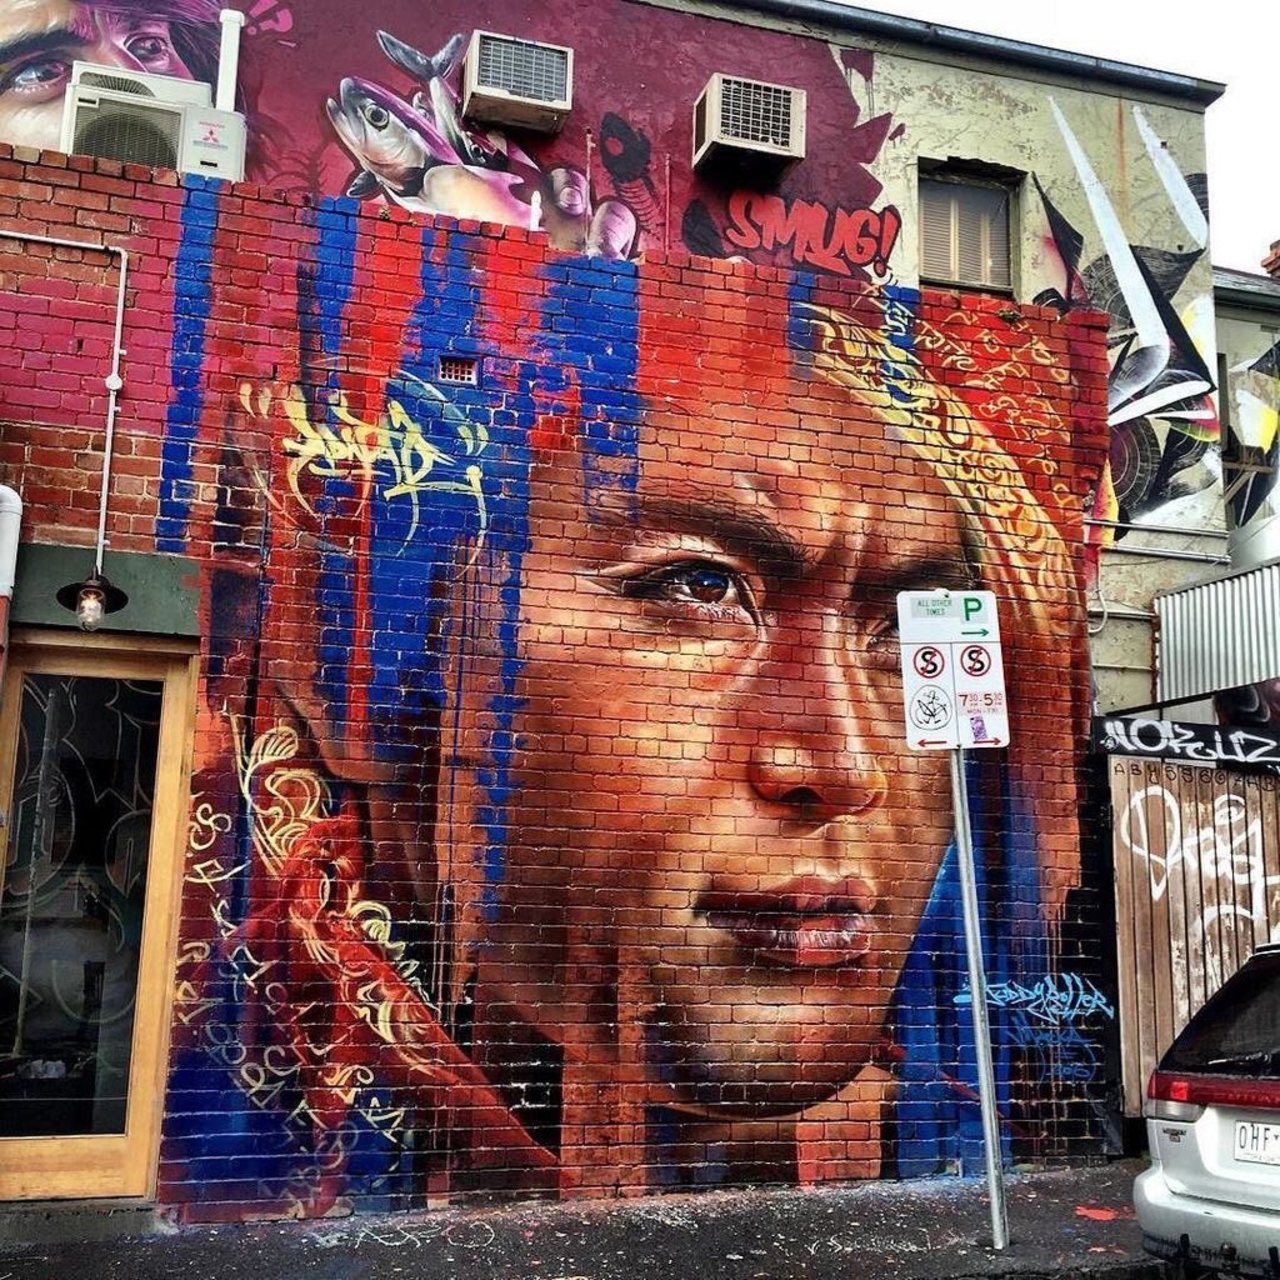 #mural by Adnate, #Melbourne #Australia #Streetart #urbanart #graffiti #art https://t.co/3HdiBHZZmX